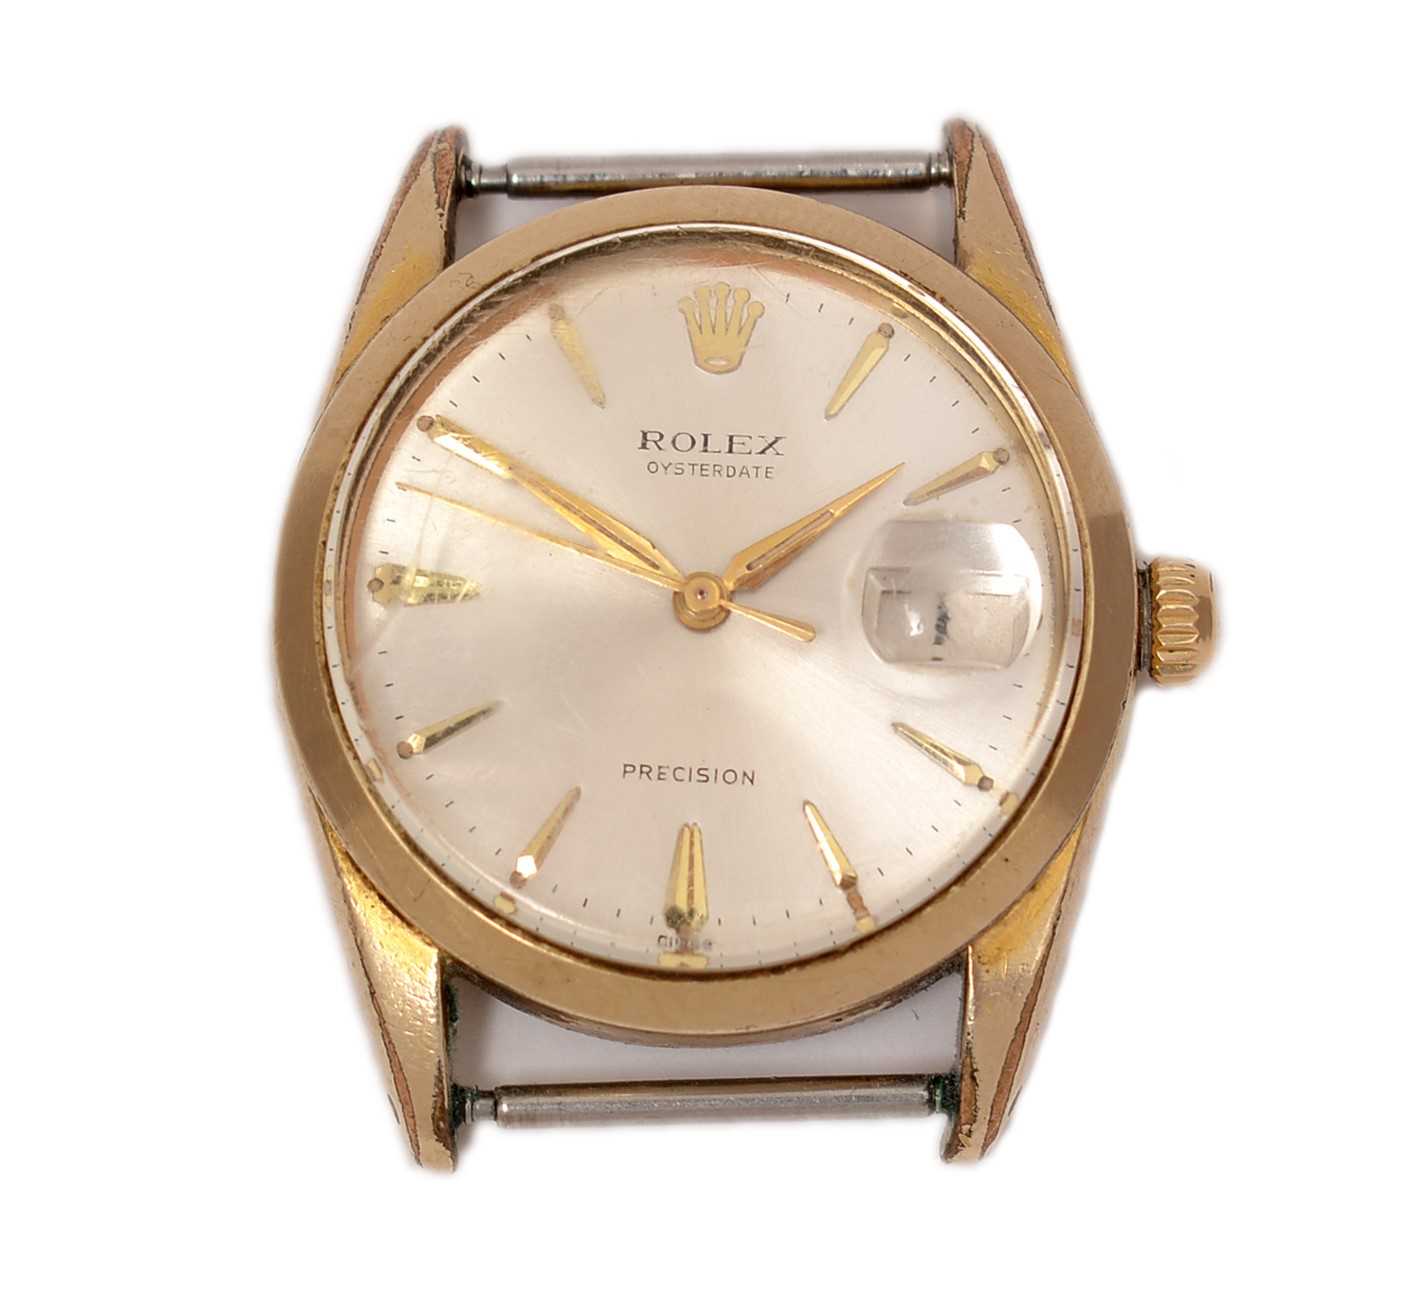 359 - Rolex Oysterdate Precision: a gilt cased wristwatch, model 6694,